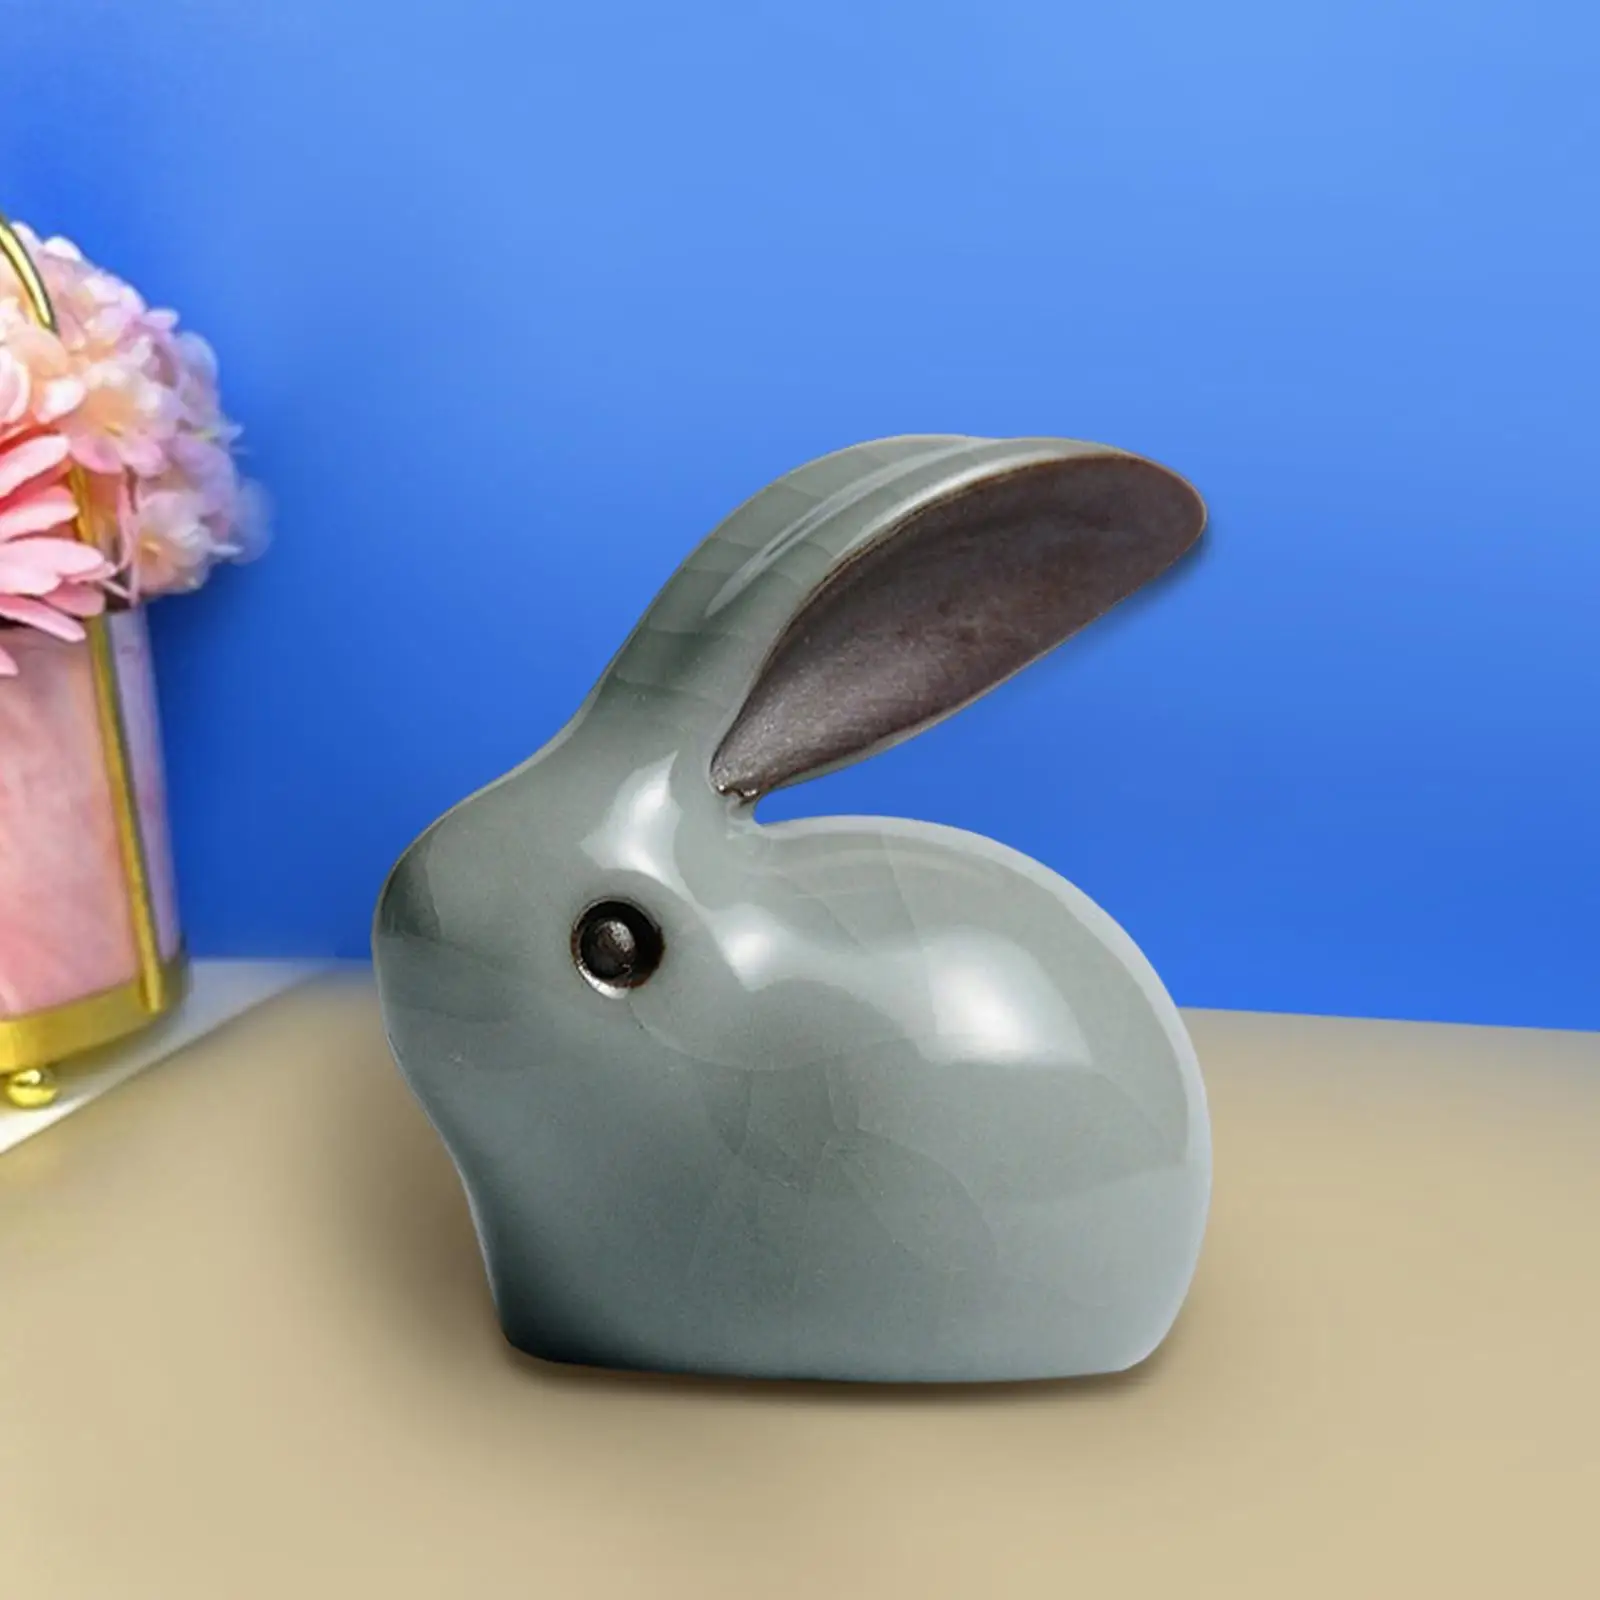 Tea Pet Rabbit Statue Ornament for Tea Decoration Tea Accessories Tabletop